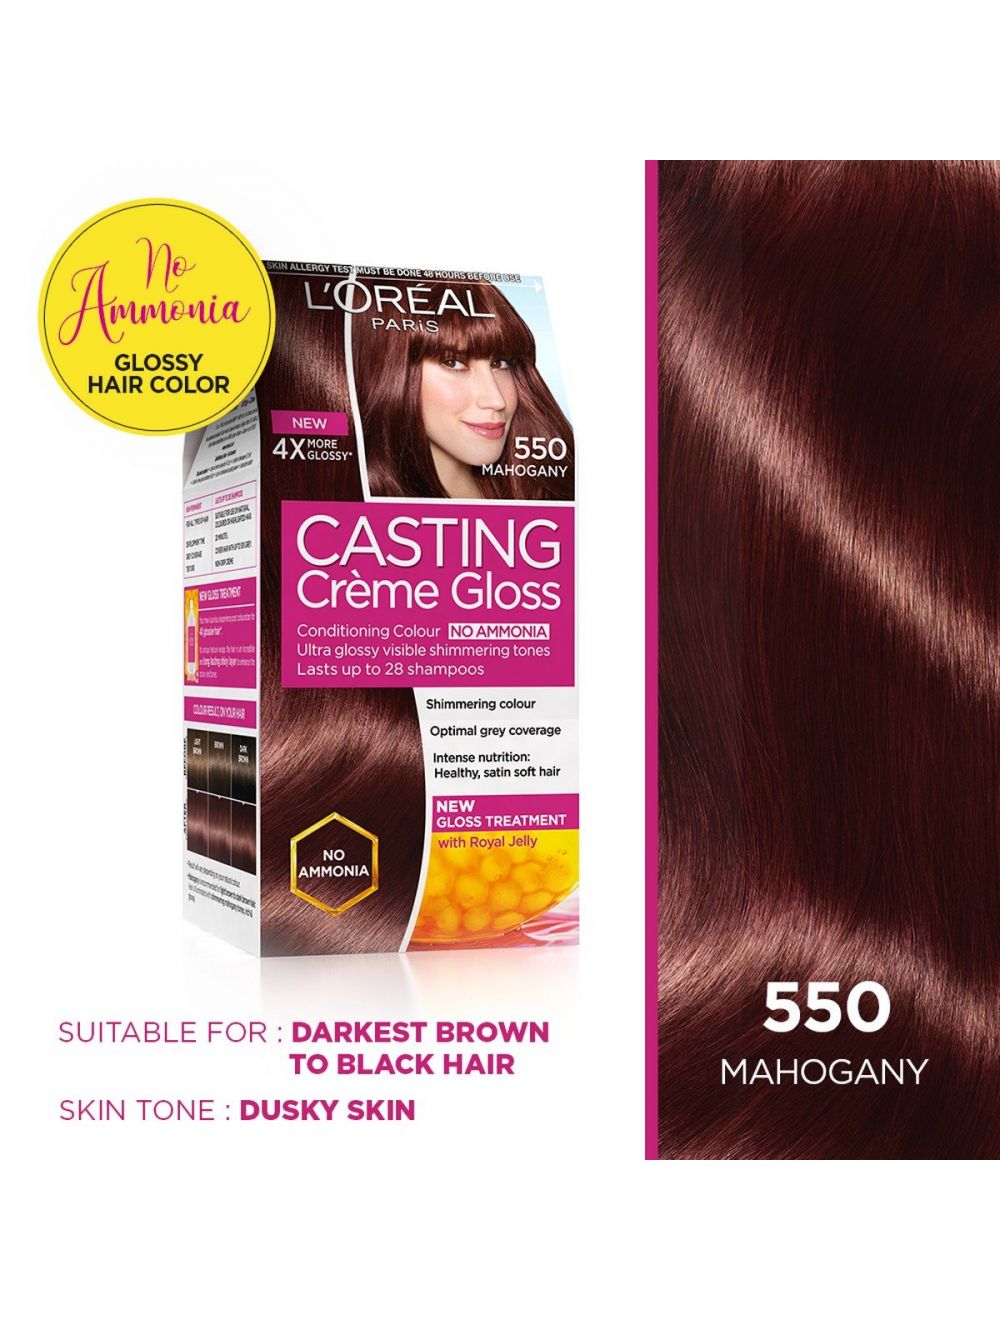 L'Oreal Paris Casting Creme Gloss Hair Color-550 Mahogany - Niram